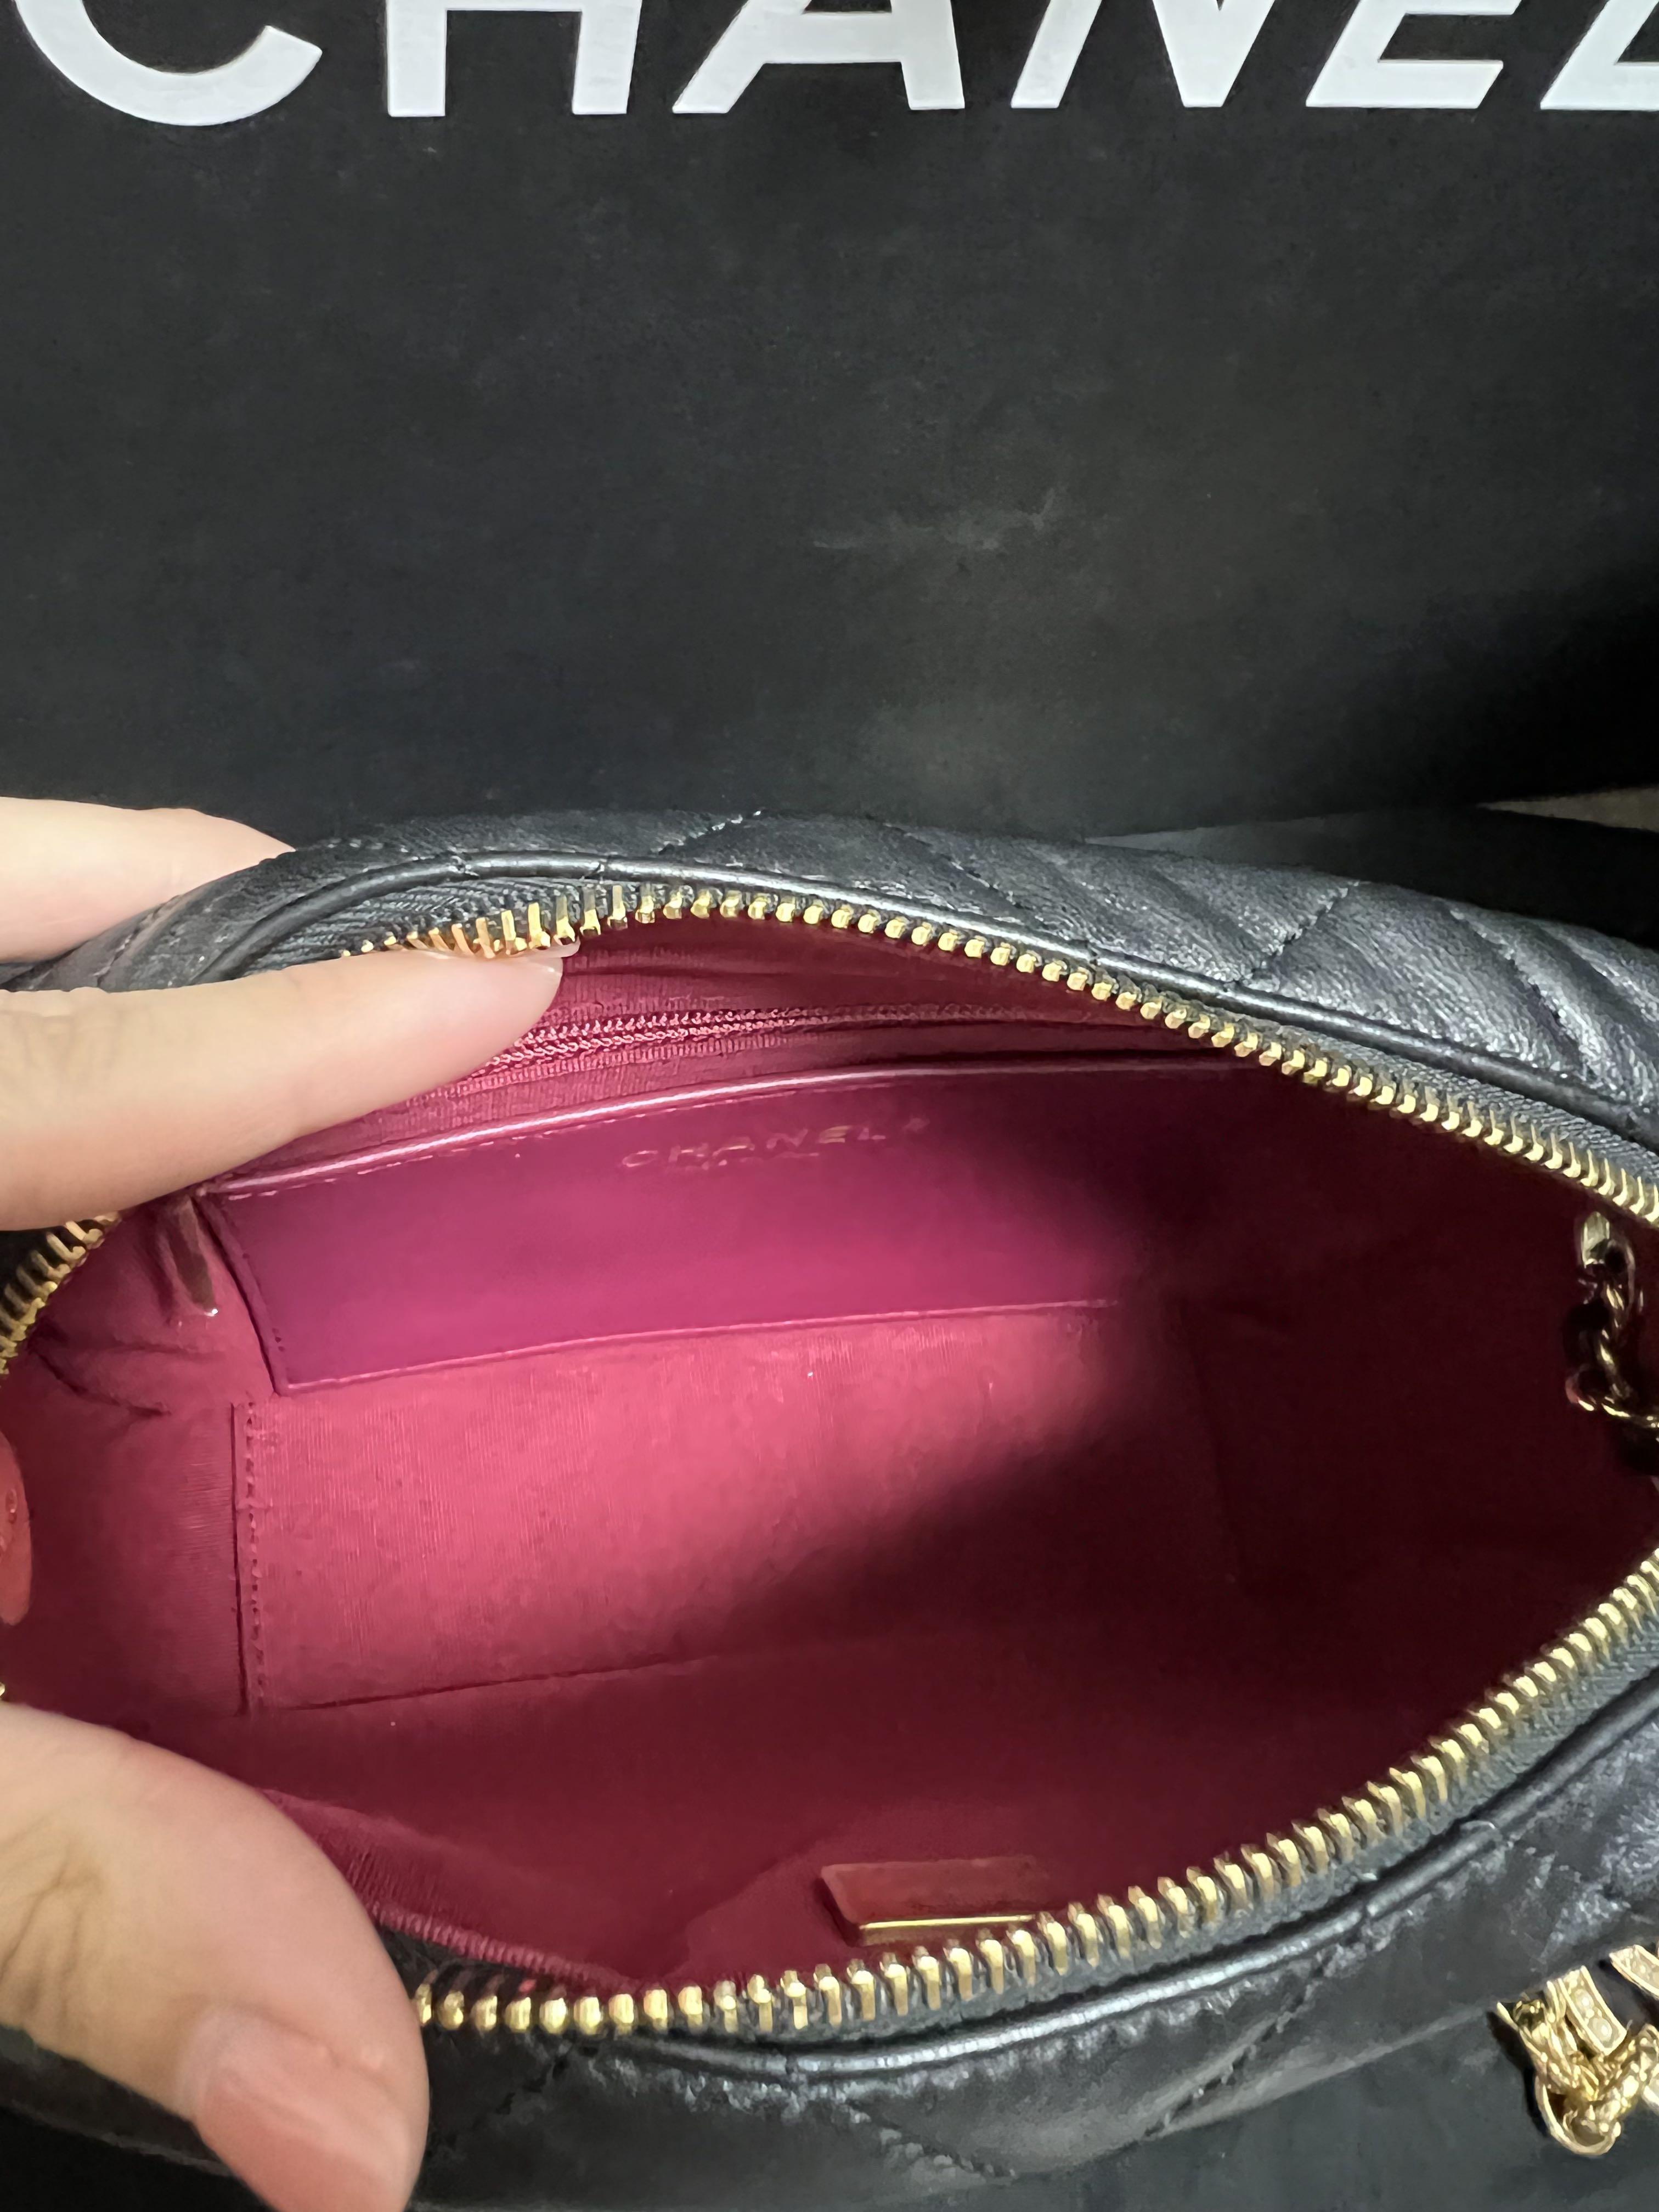 chanel pink clutch bag